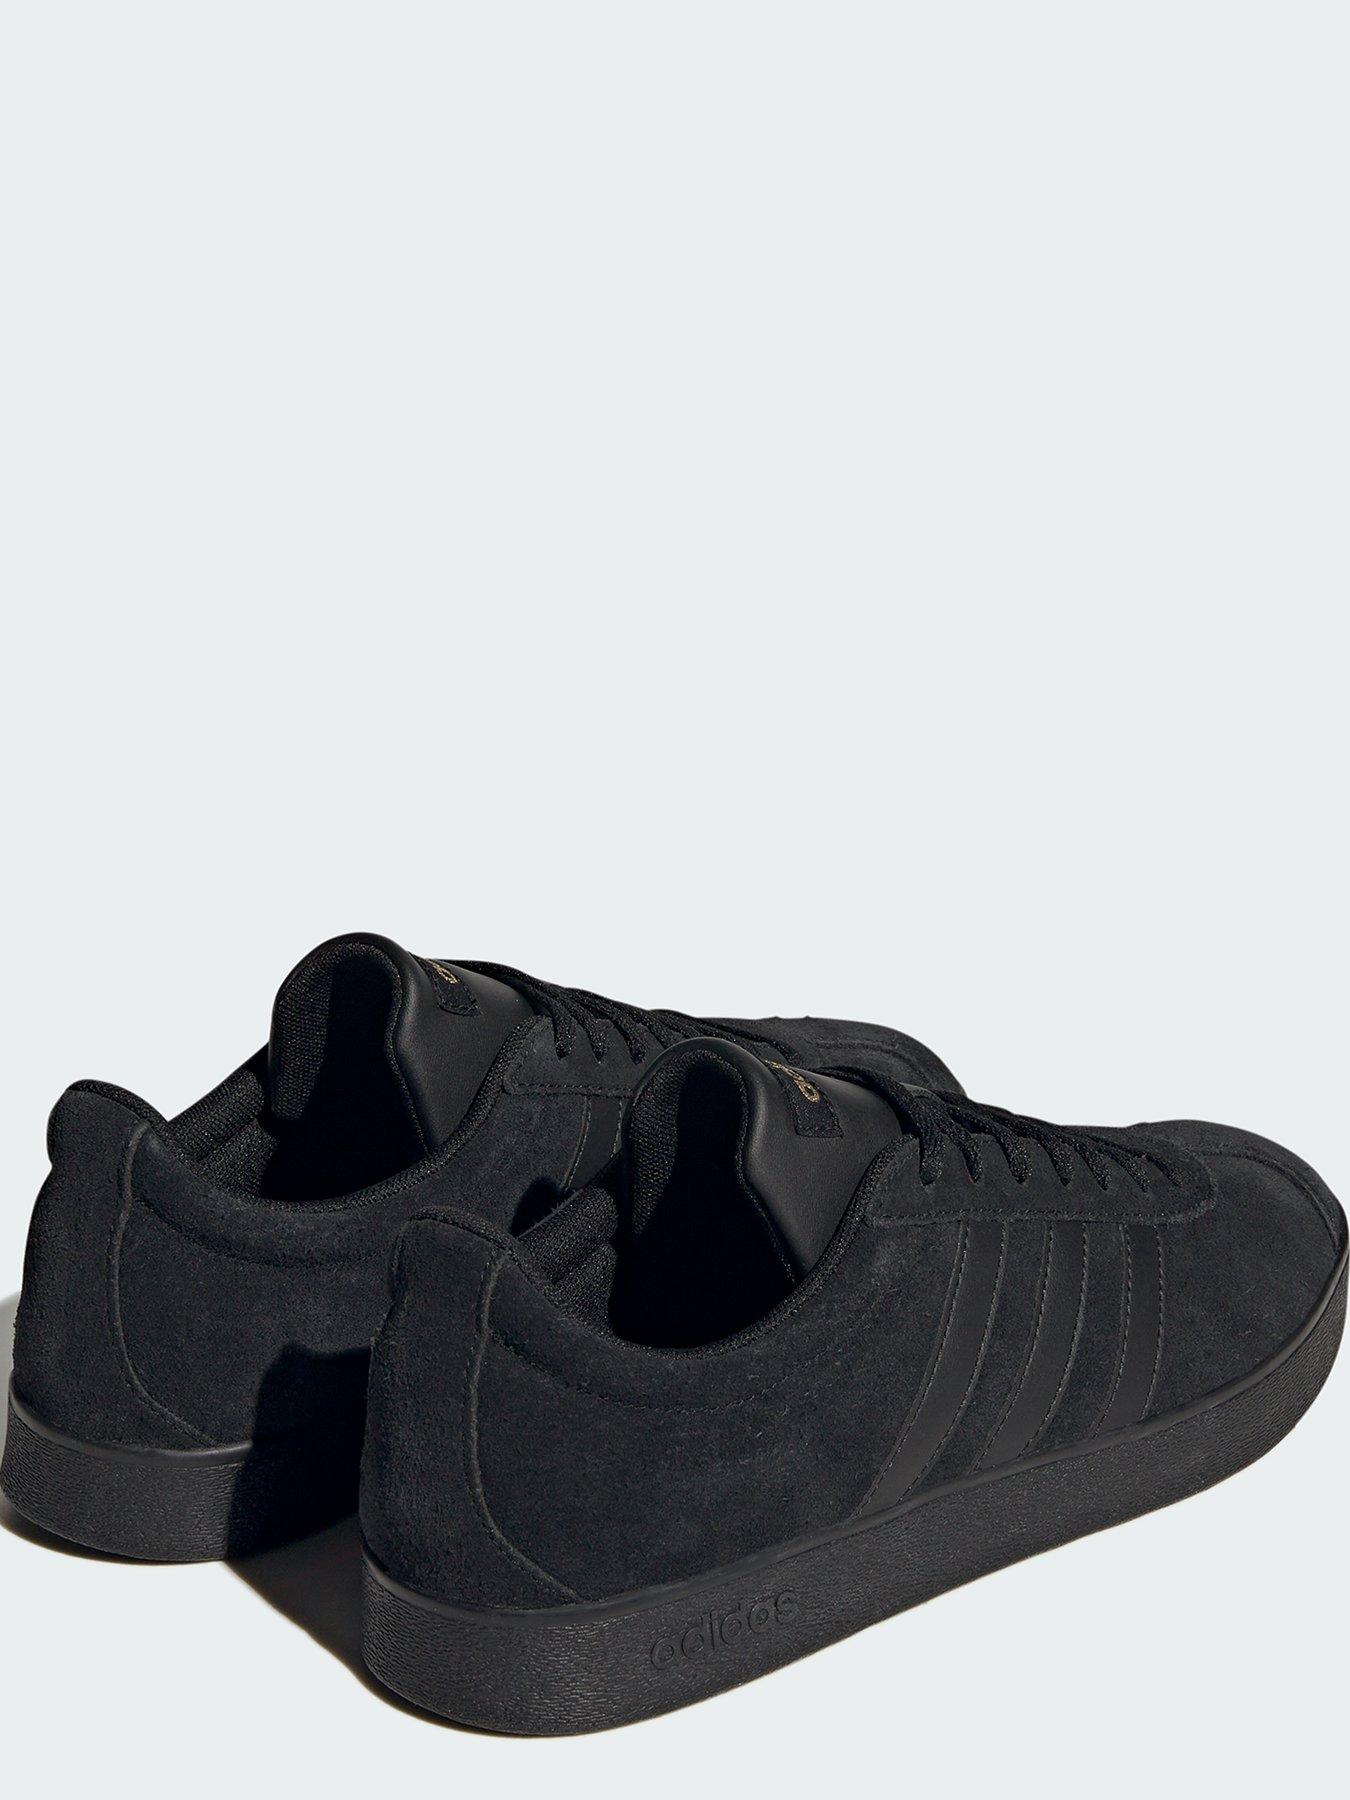 adidas VL Court 2.0 - Black